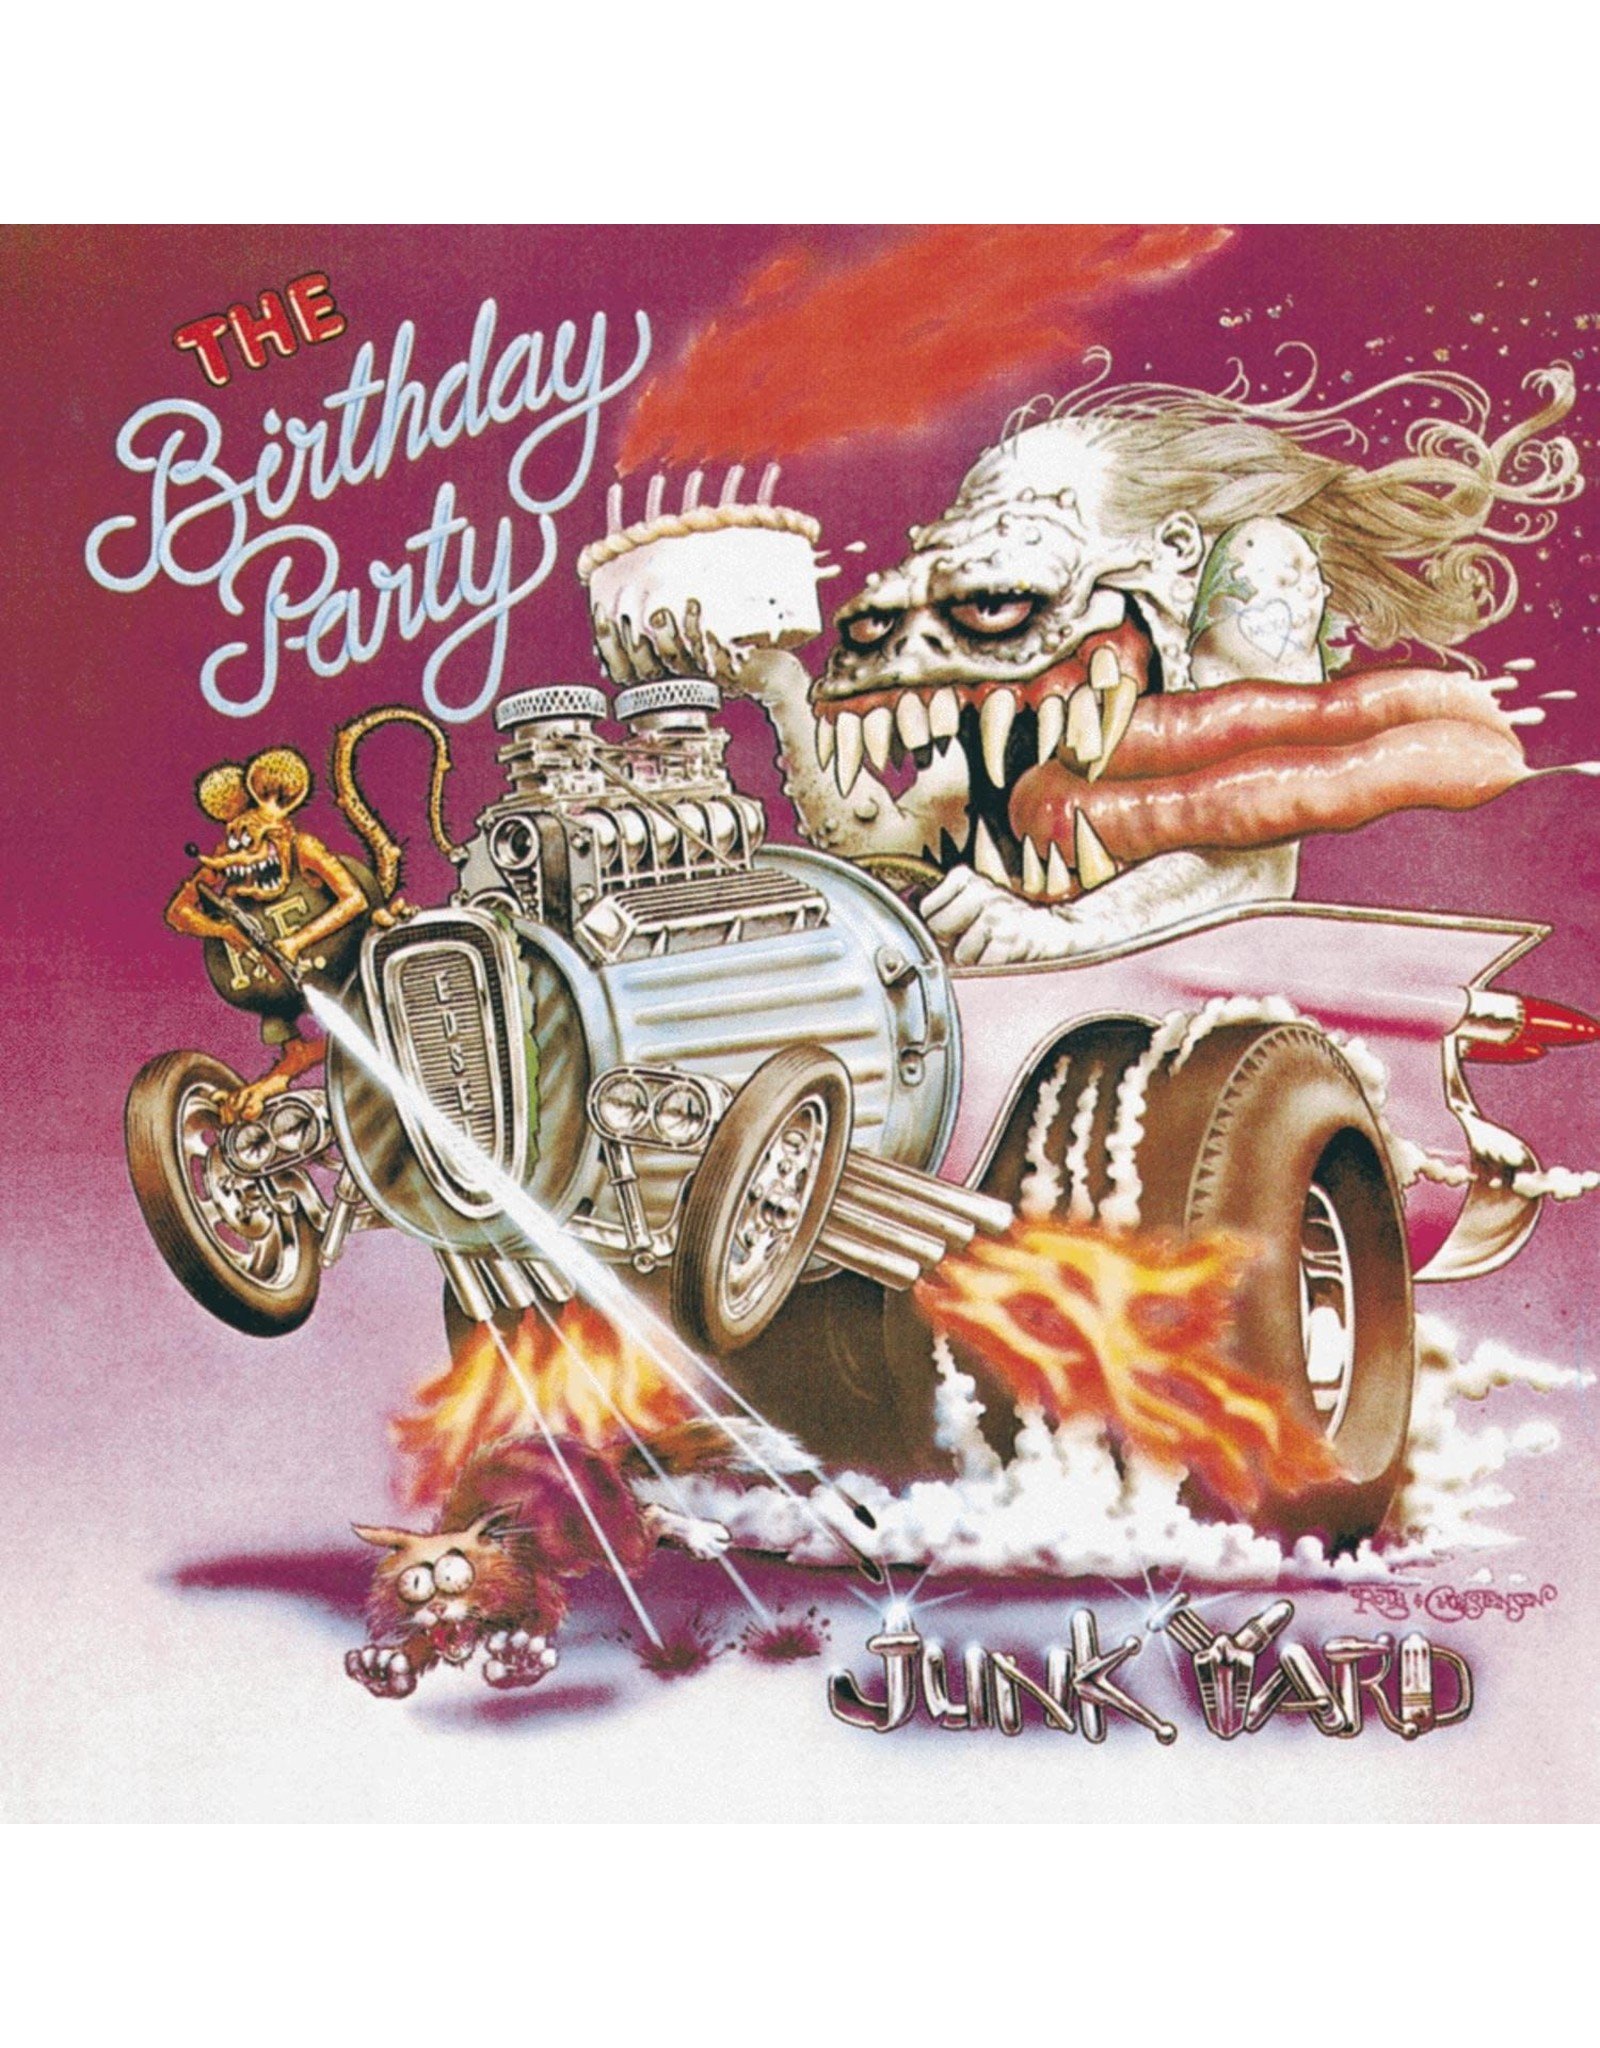 Drastic Plastic Birthday Party: Junkyard (orange) LP